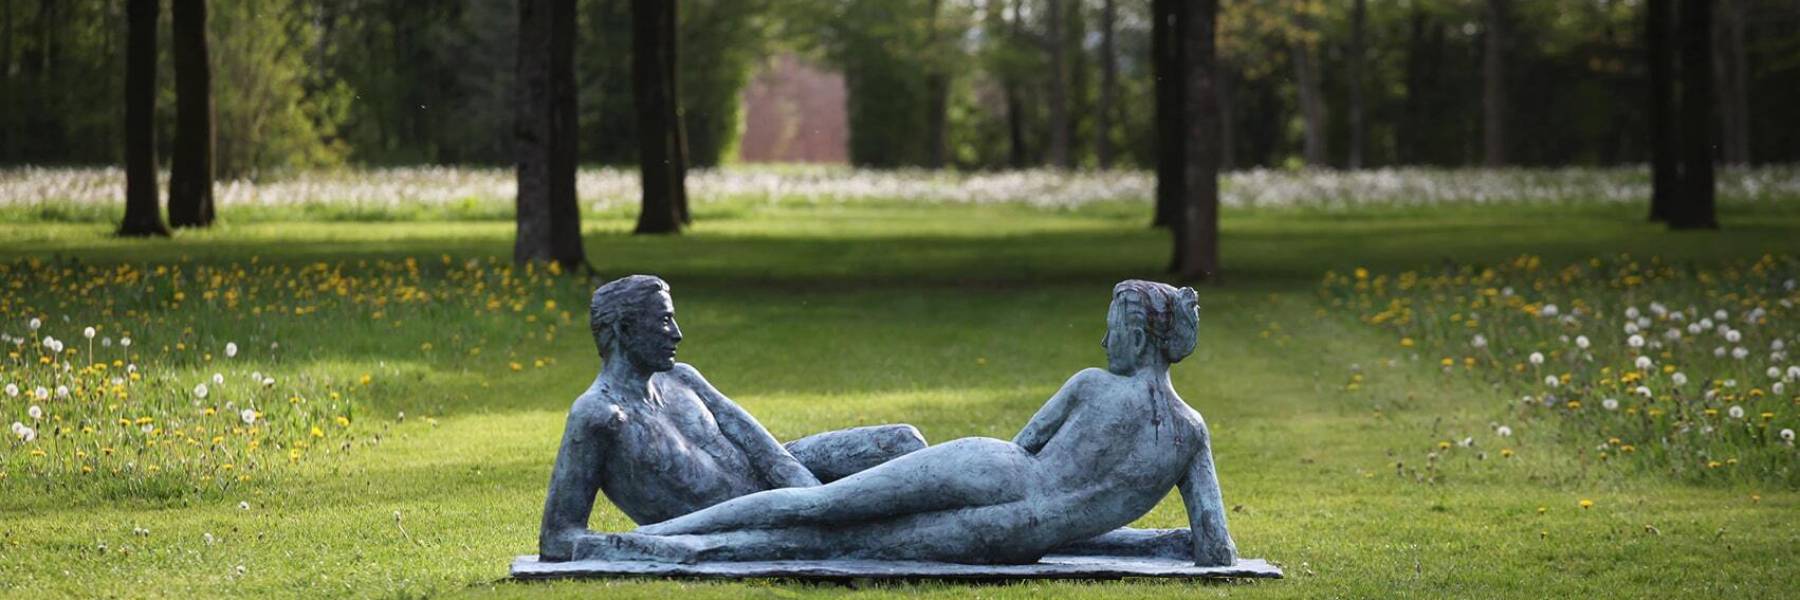 Jardin des sculptures